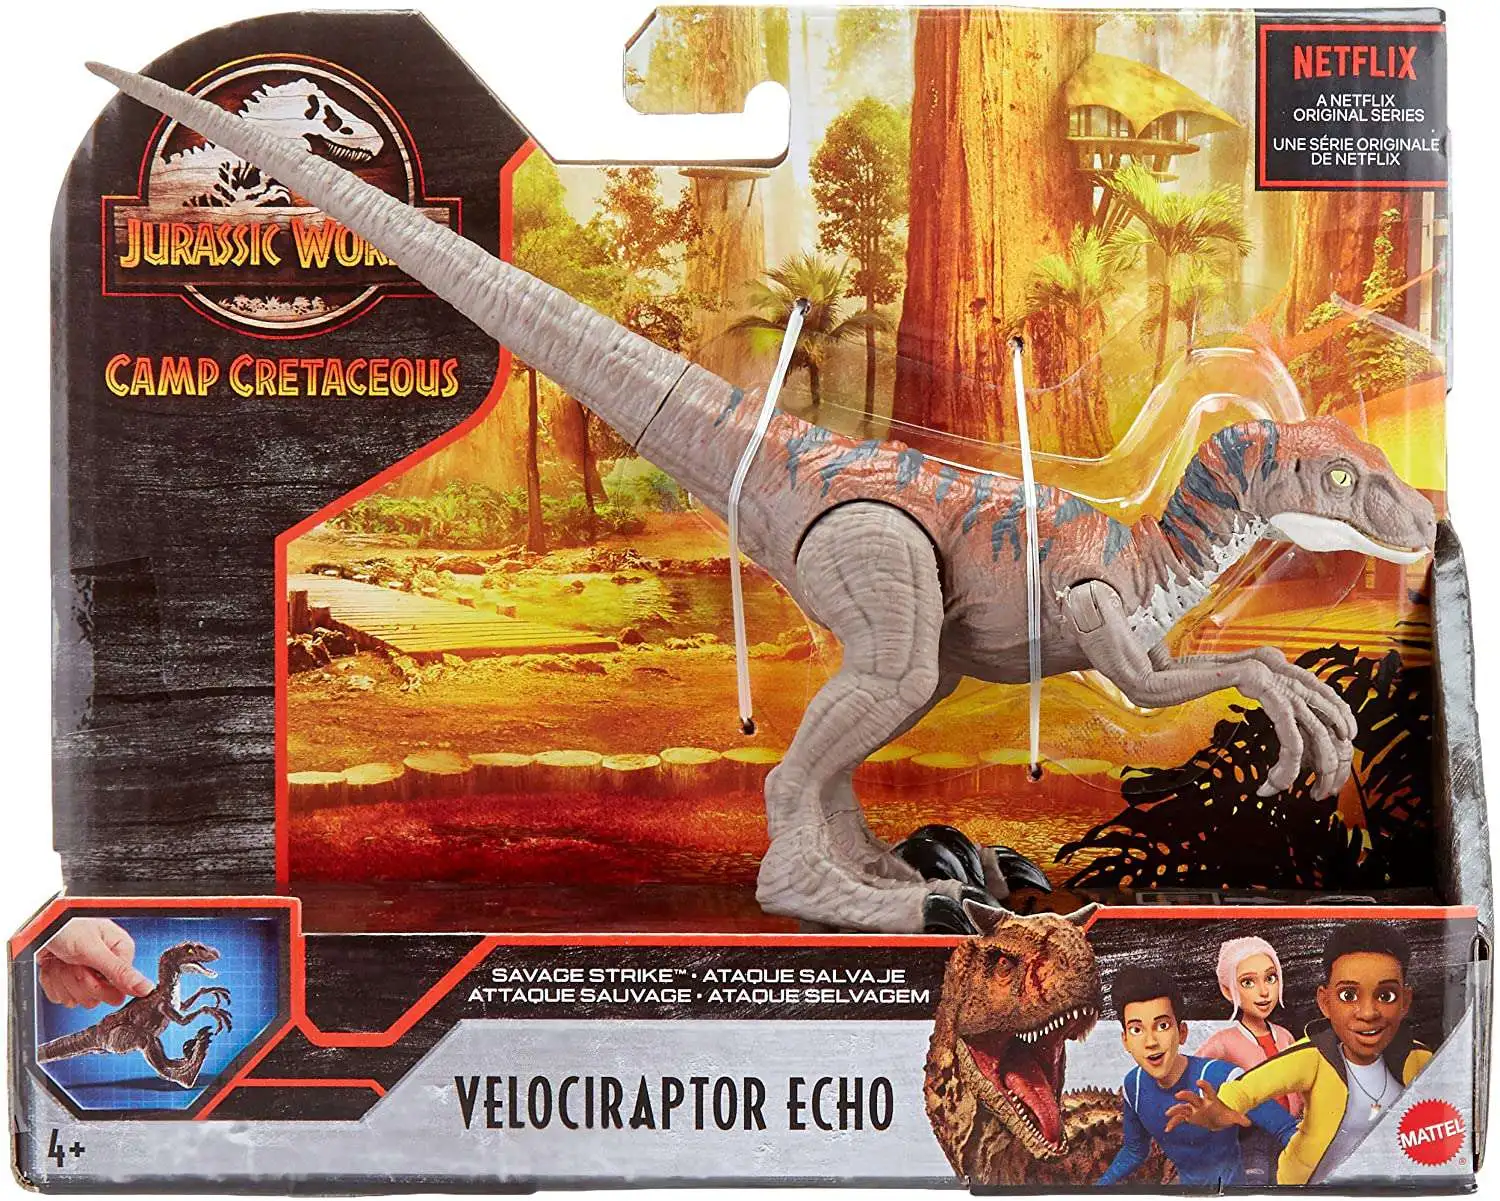 Jurassic World Camp Cretaceous Velociraptor Echo Action Figure